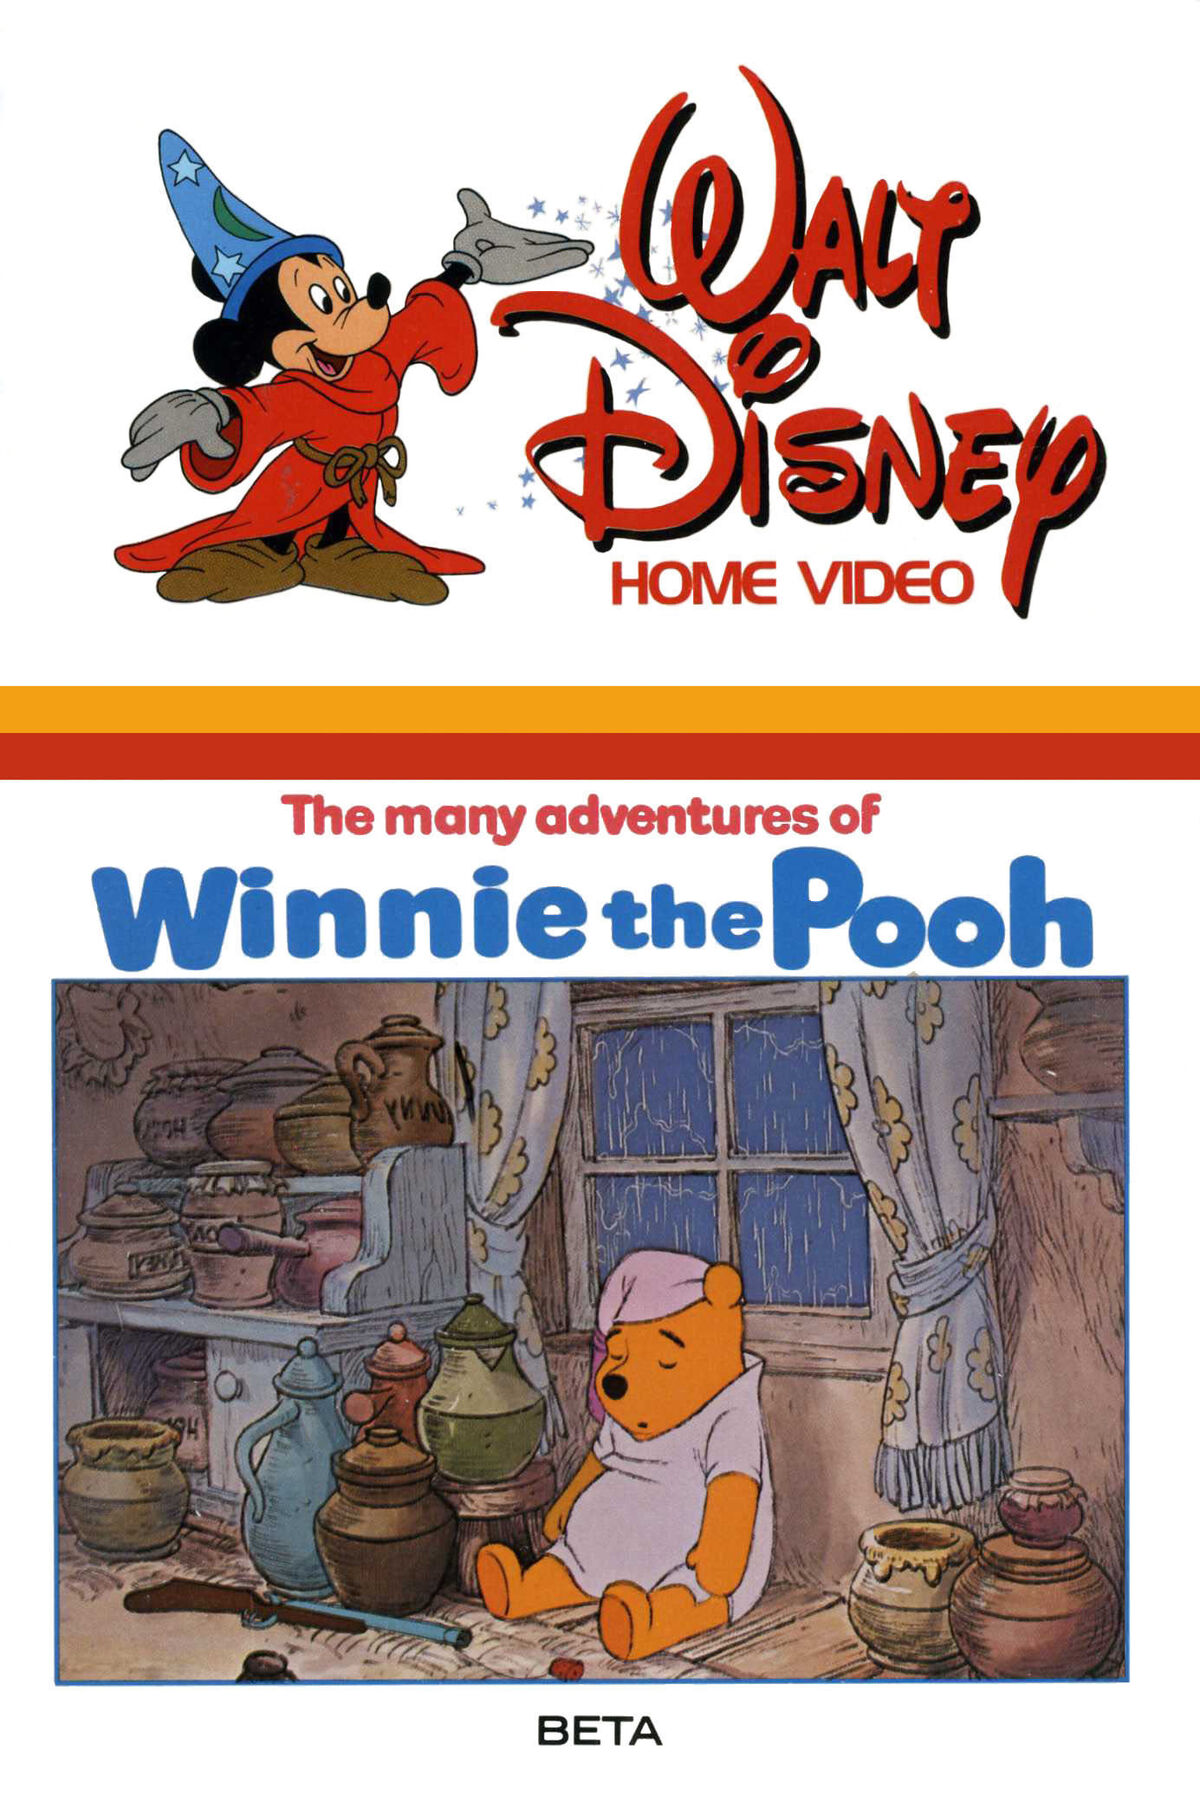 seasons of giving trailer winnie the pooh